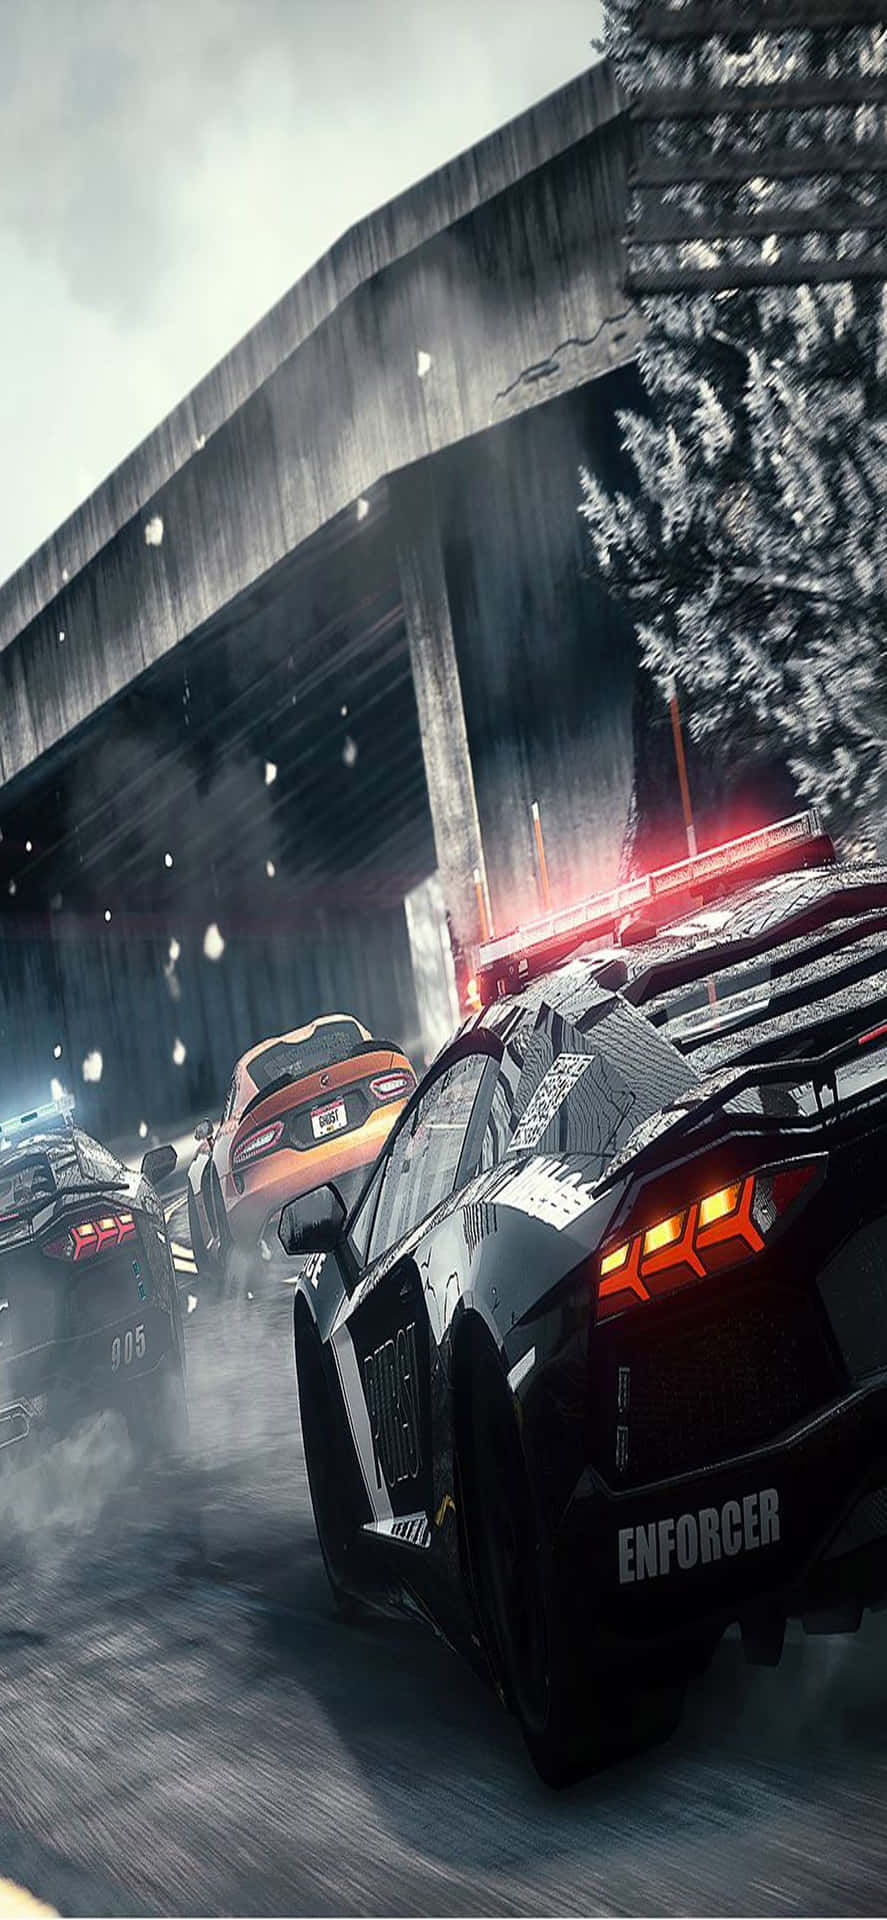 Emozionantesfondo Per Iphone Xs Max Con Protagonista Need For Speed 